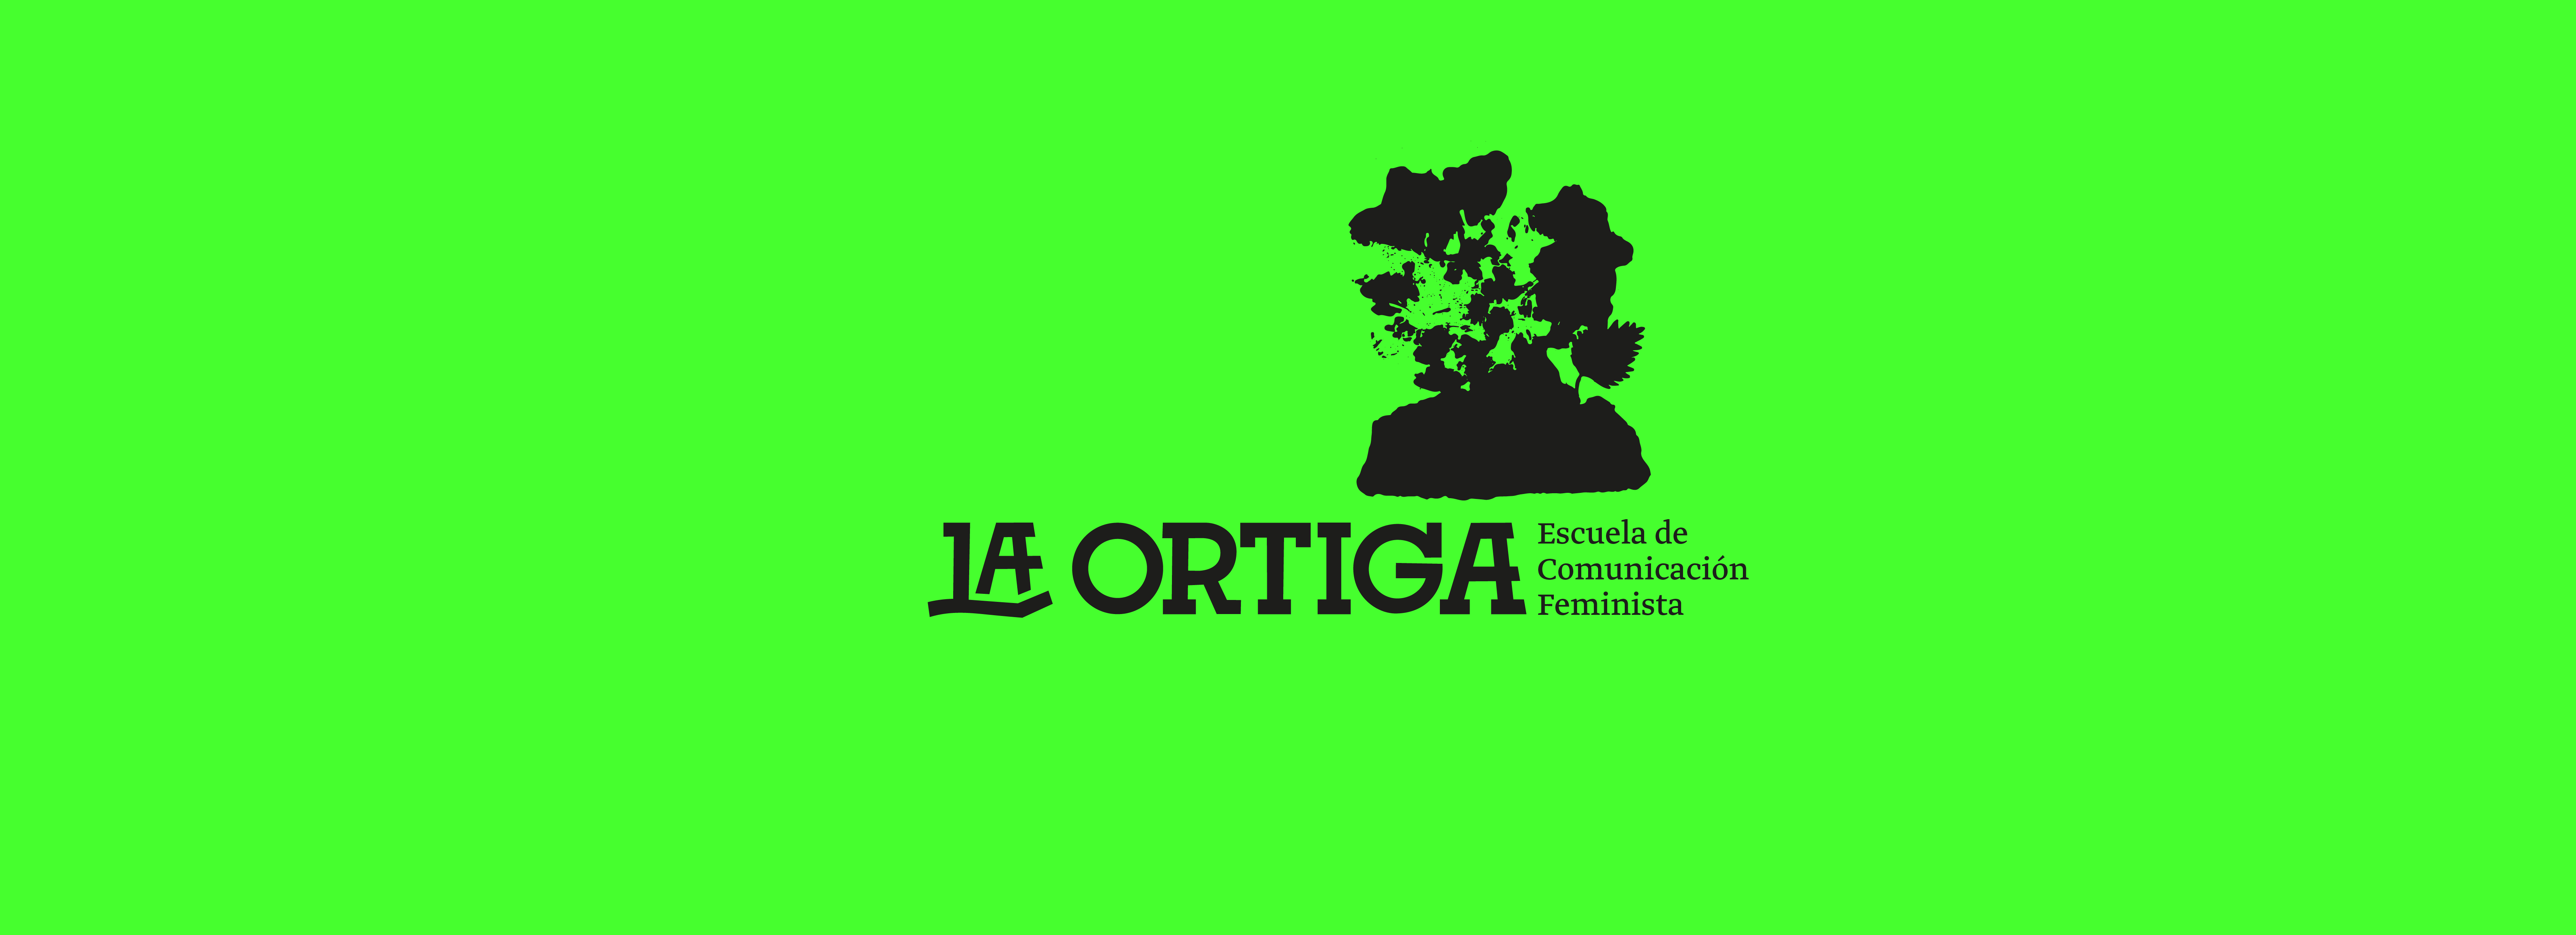 Escuela de Comunicación Feminista La Ortiga